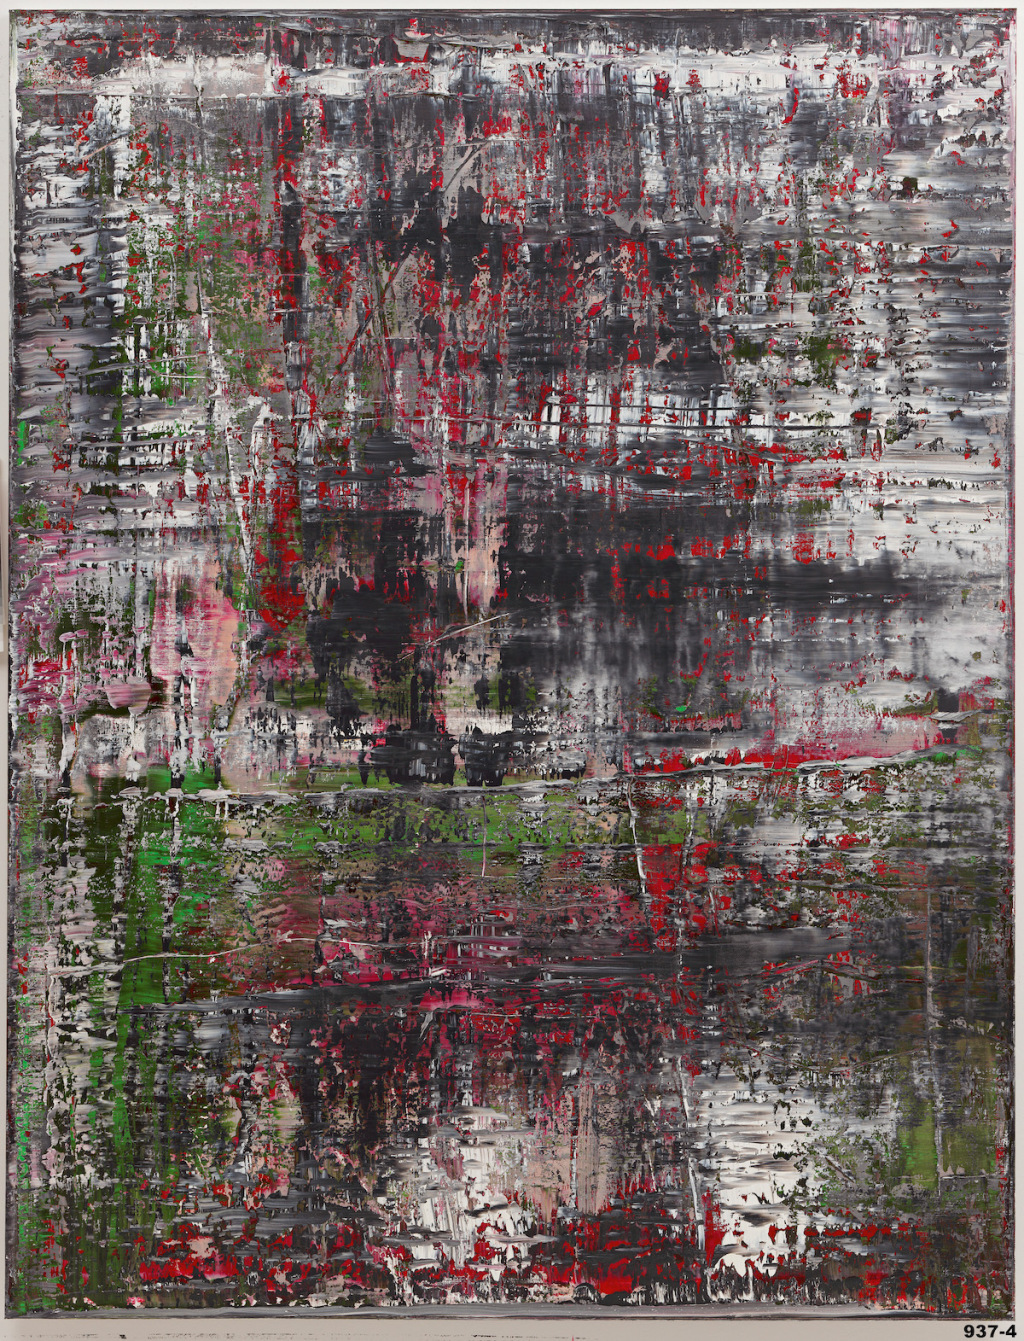 Gerhard Richter Permanently Loans 100 Works to Berlin Museum – ARTnews.com